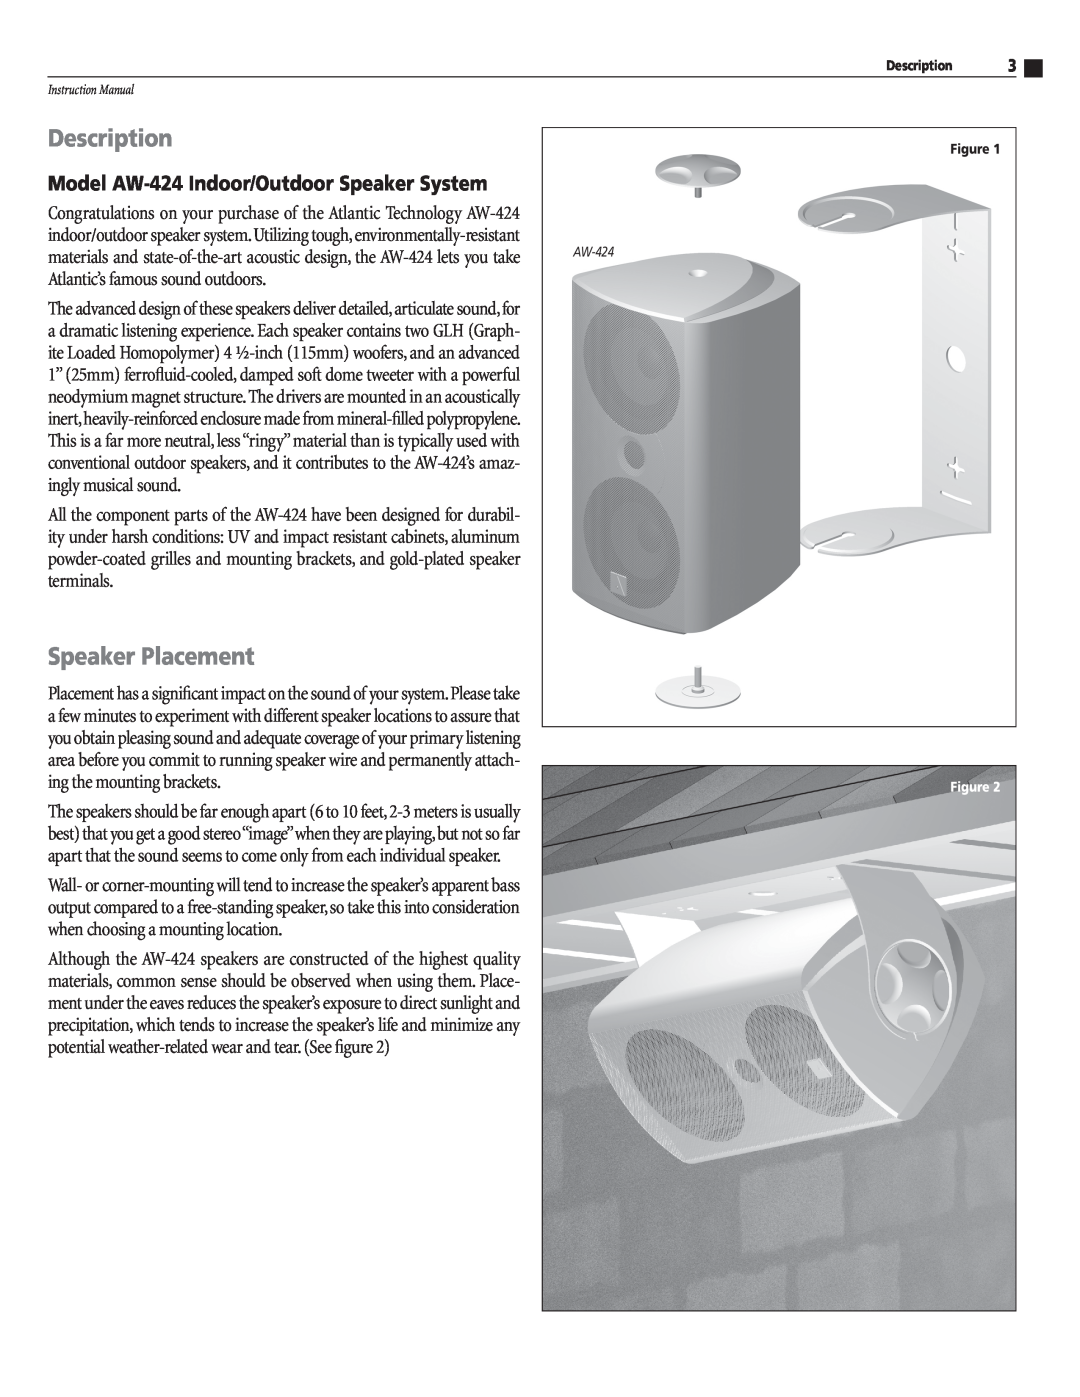 Atlantic Technology instruction manual Description, Speaker Placement, Model AW-424Indoor/Outdoor Speaker System 